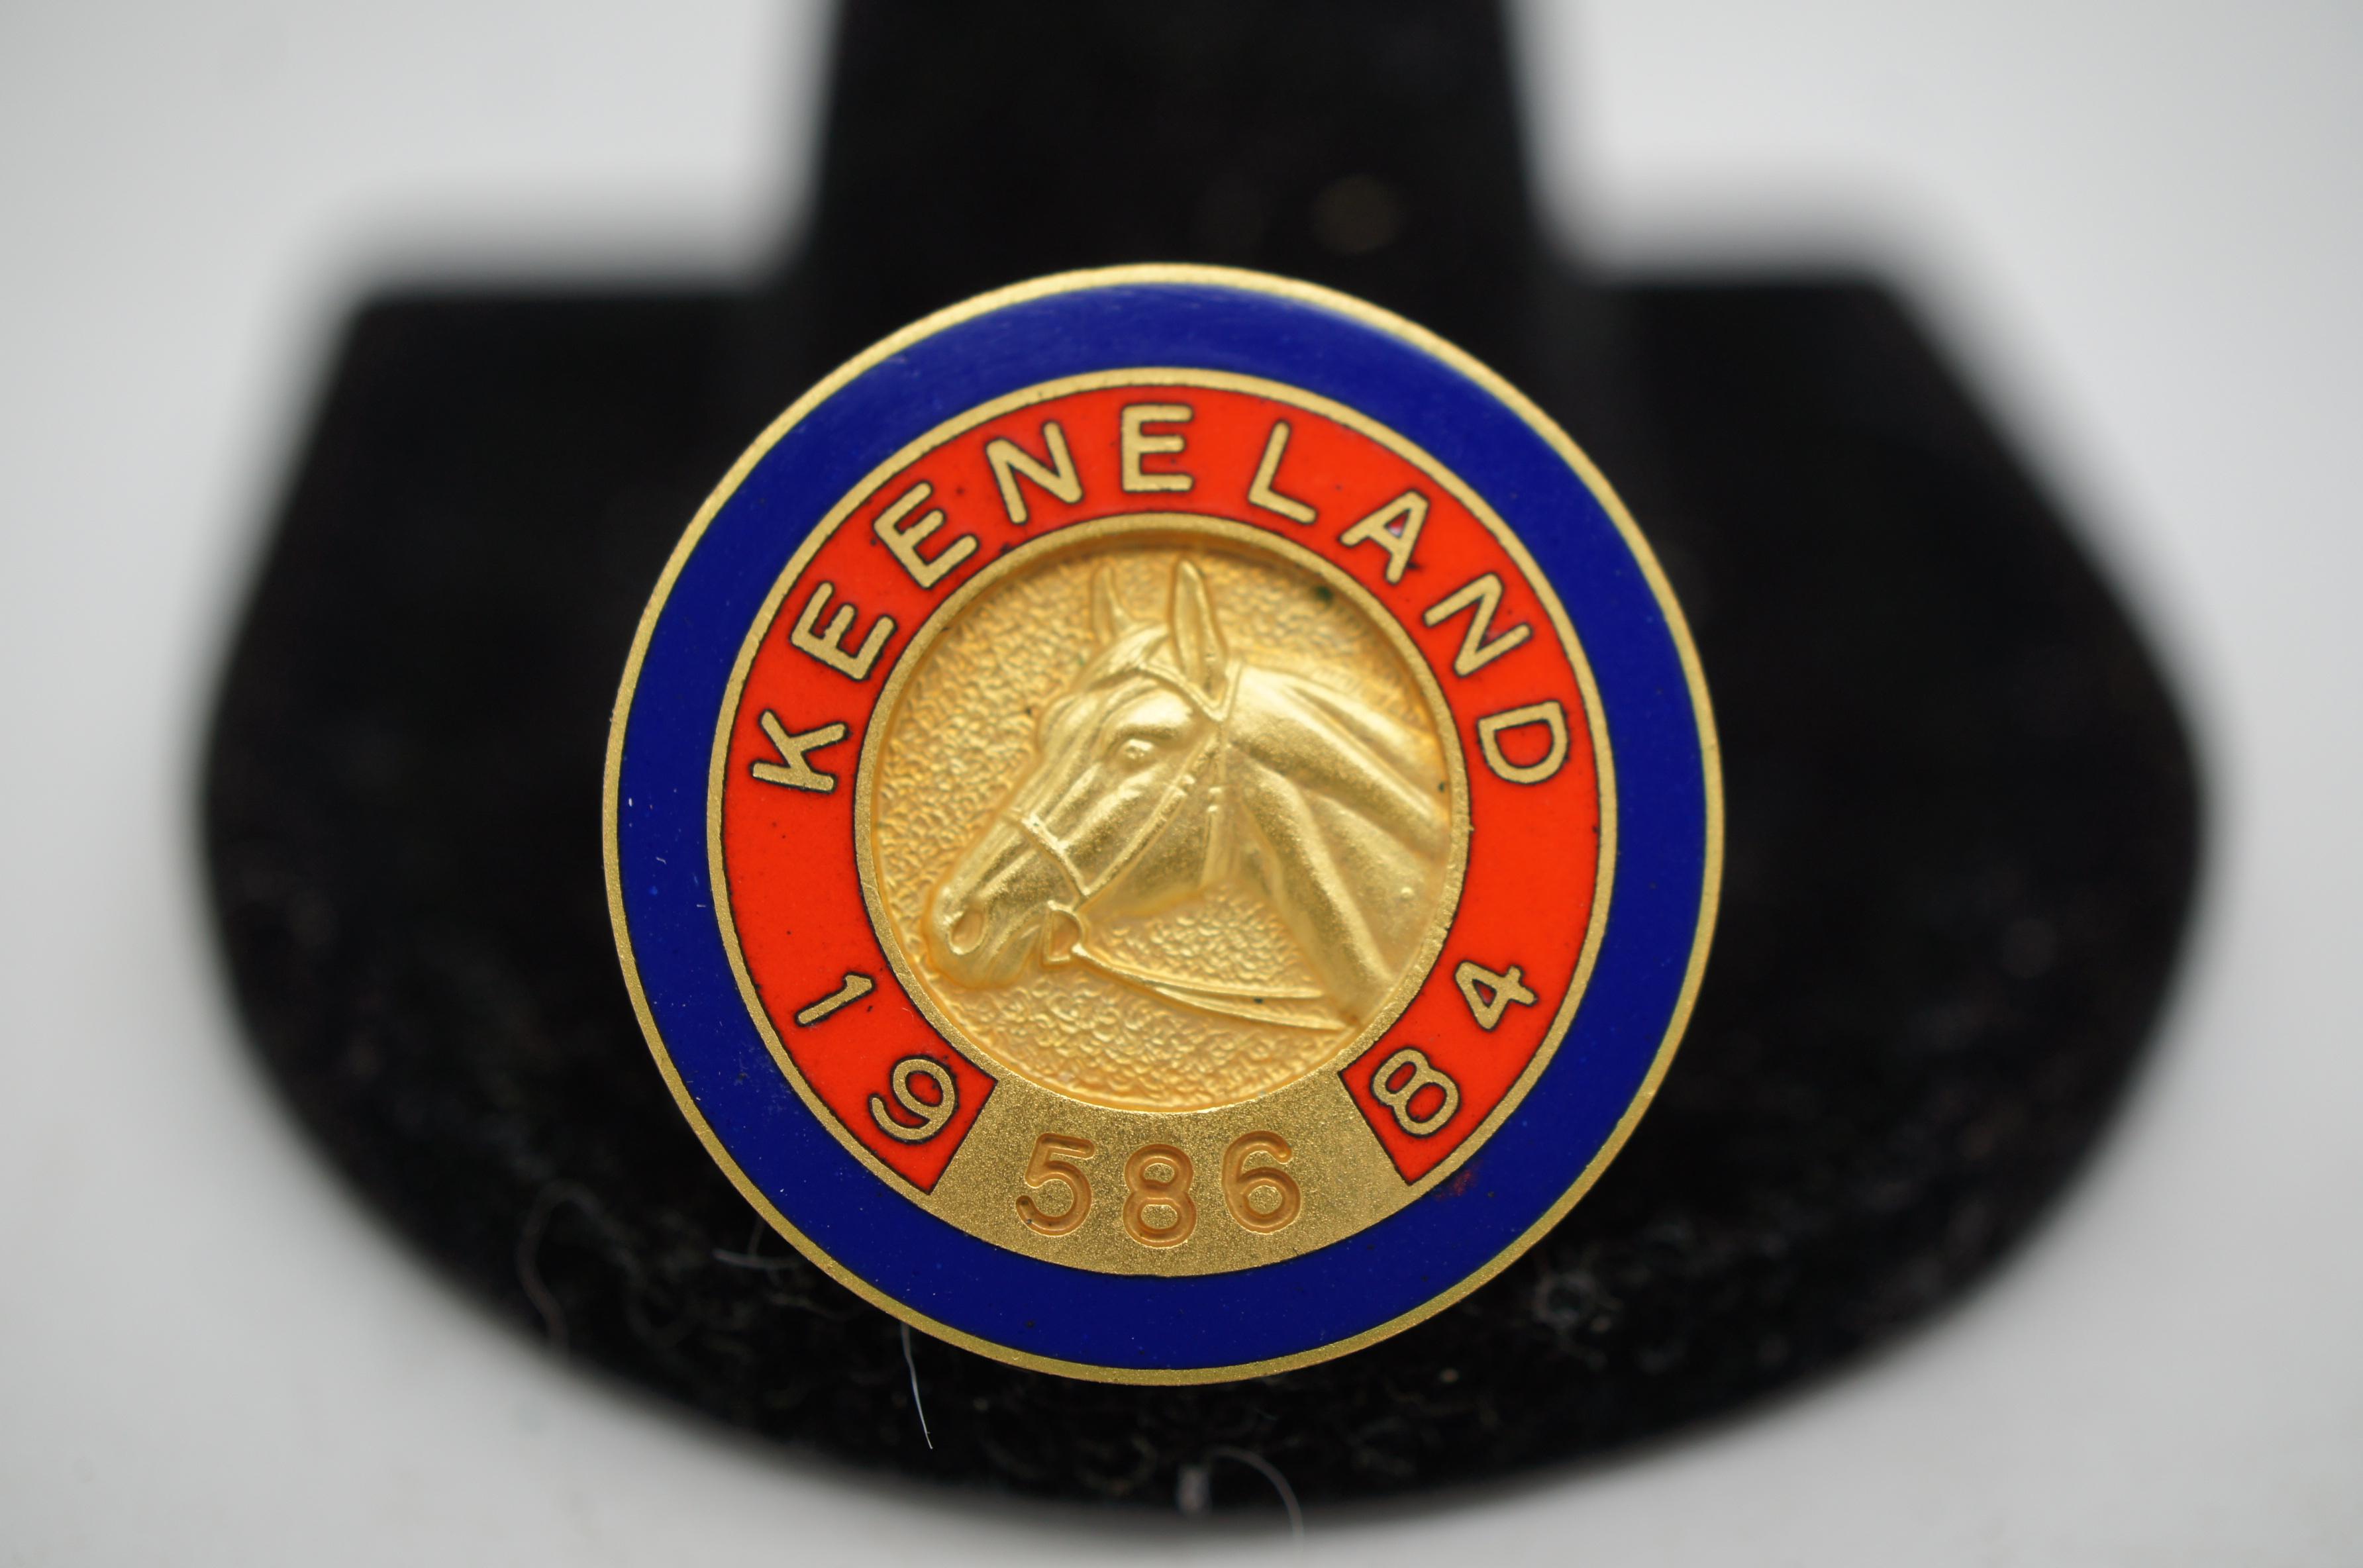 Brass 1984 Vintage Keenland Member Pin Enamel Badge Horse Racing Equestrian 1